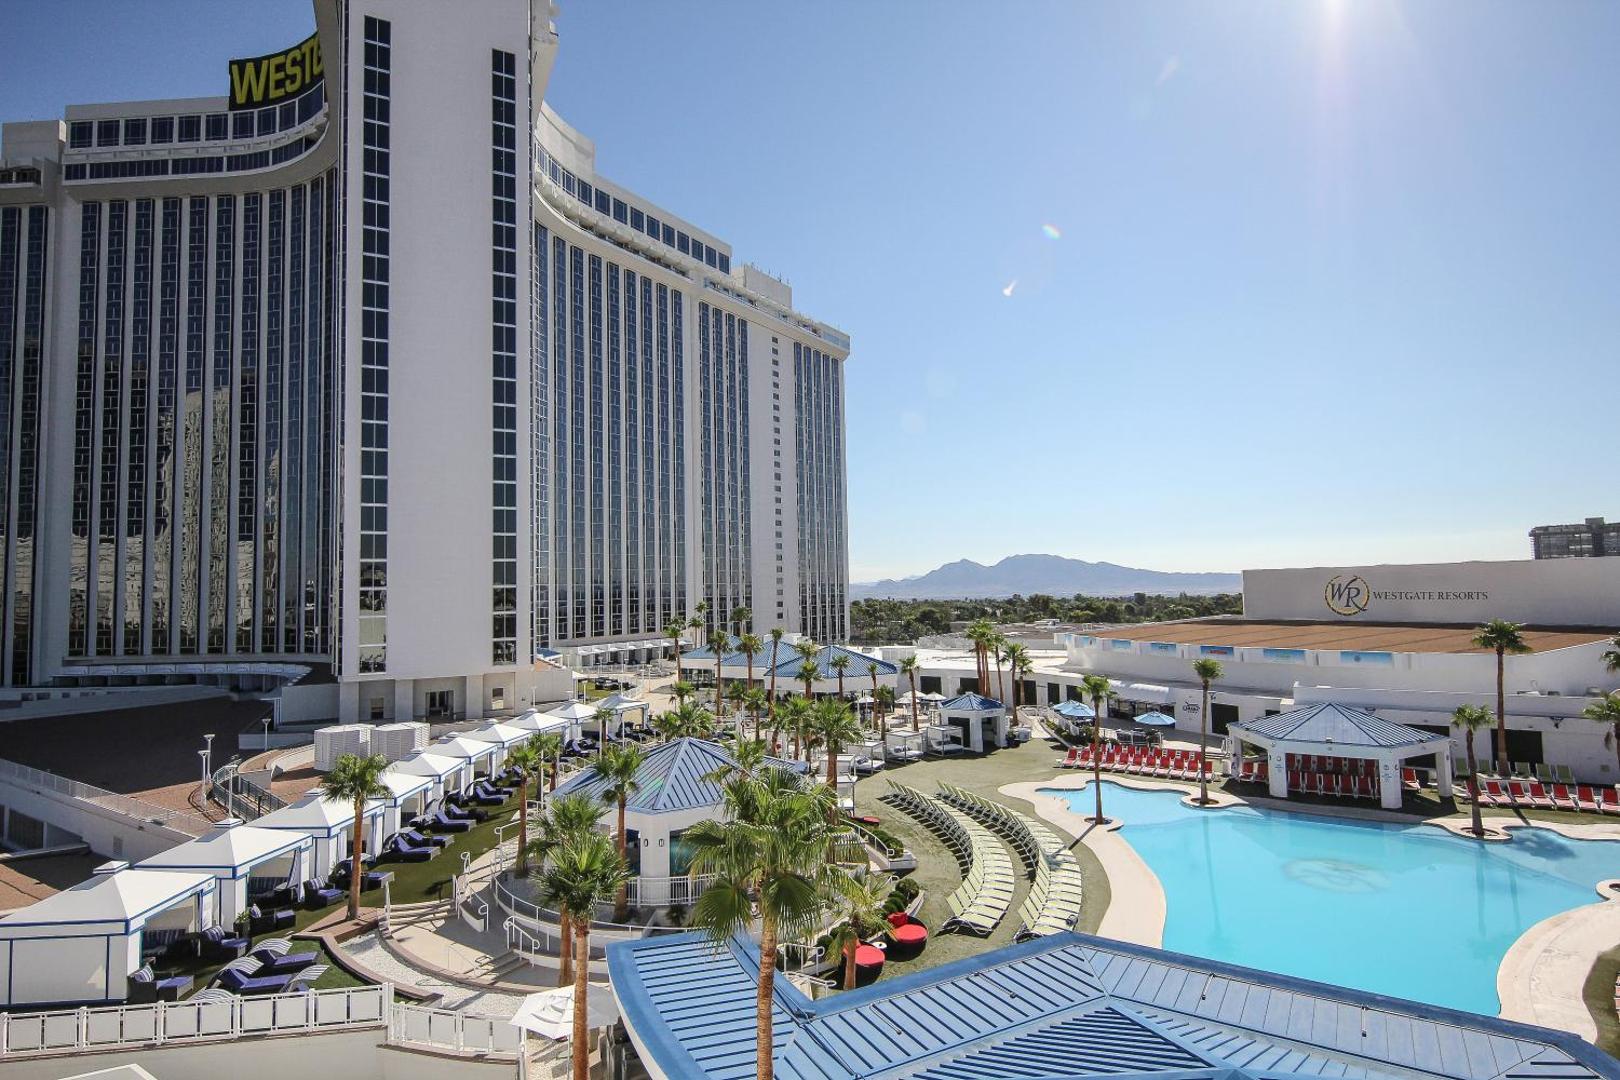 Westgate Las Vegas Resort & Casino